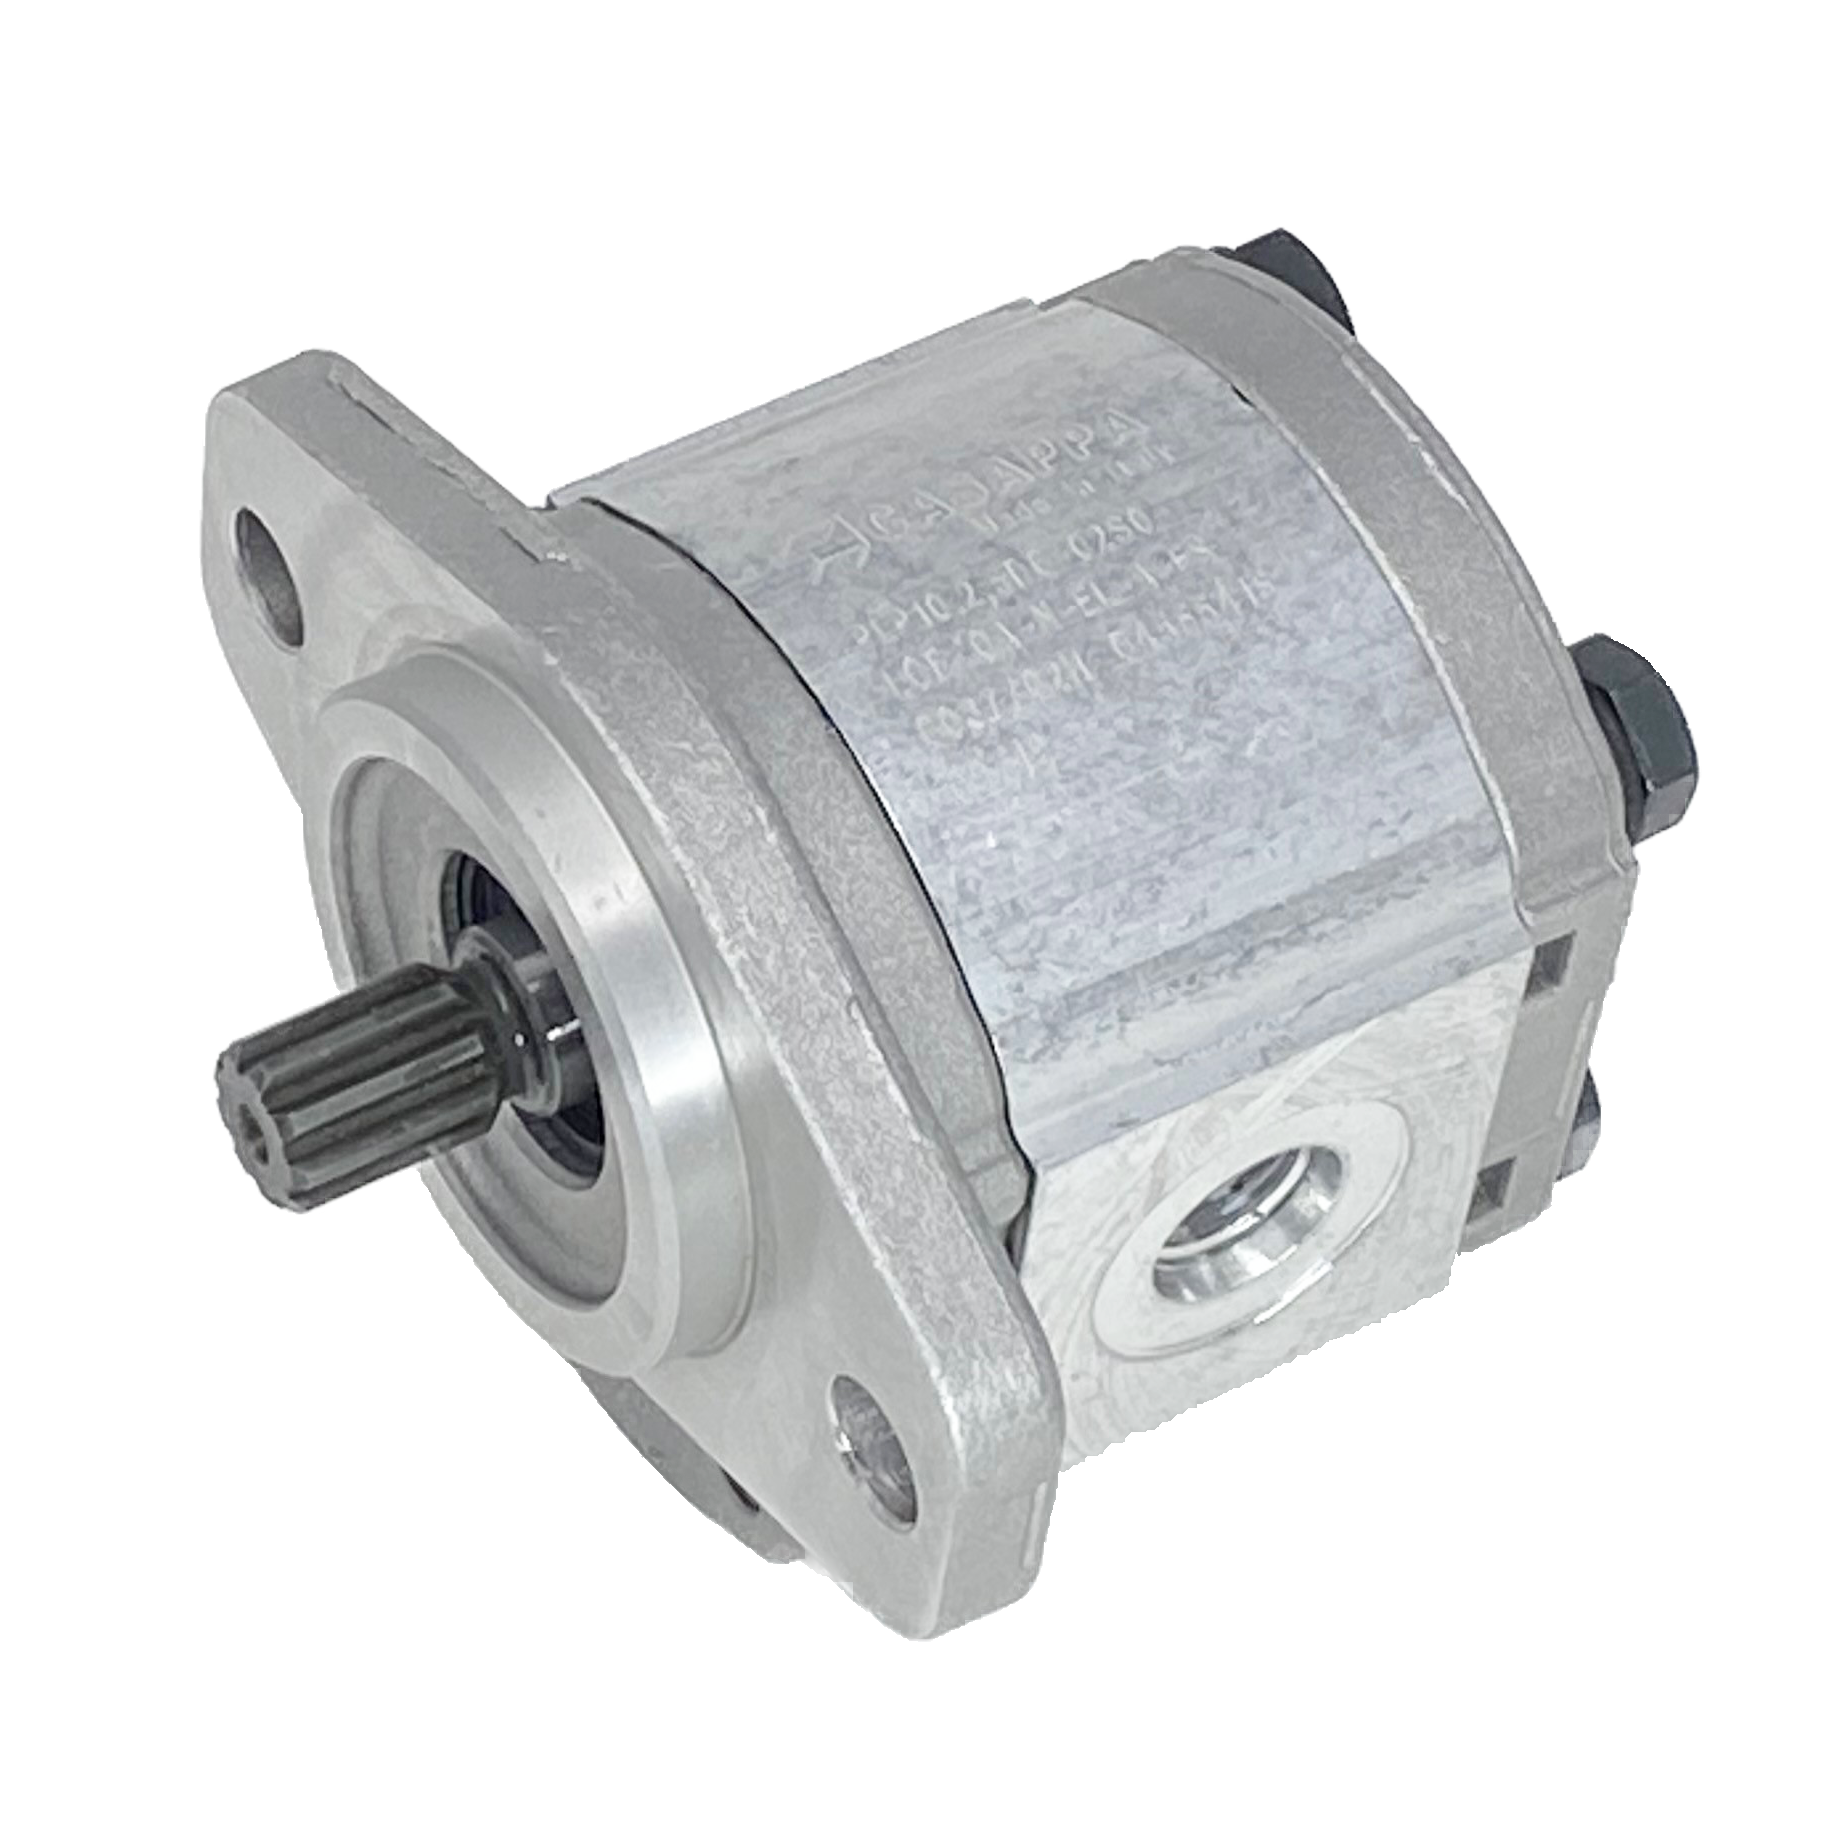 PLP10.2,5D0-02S0-LOB/OA-N-EL : Casappa Polaris Gear Pump, 2.67cc, 3770psi Rated, 4000RPM, CW, 9T 20/40dp Shaft, SAE AA 2-Bolt Flange, 0.5 (1/2") #8 SAE Inlet, 0.375 (3/8") #6 SAE Outlet, Aluminum Body & Flange